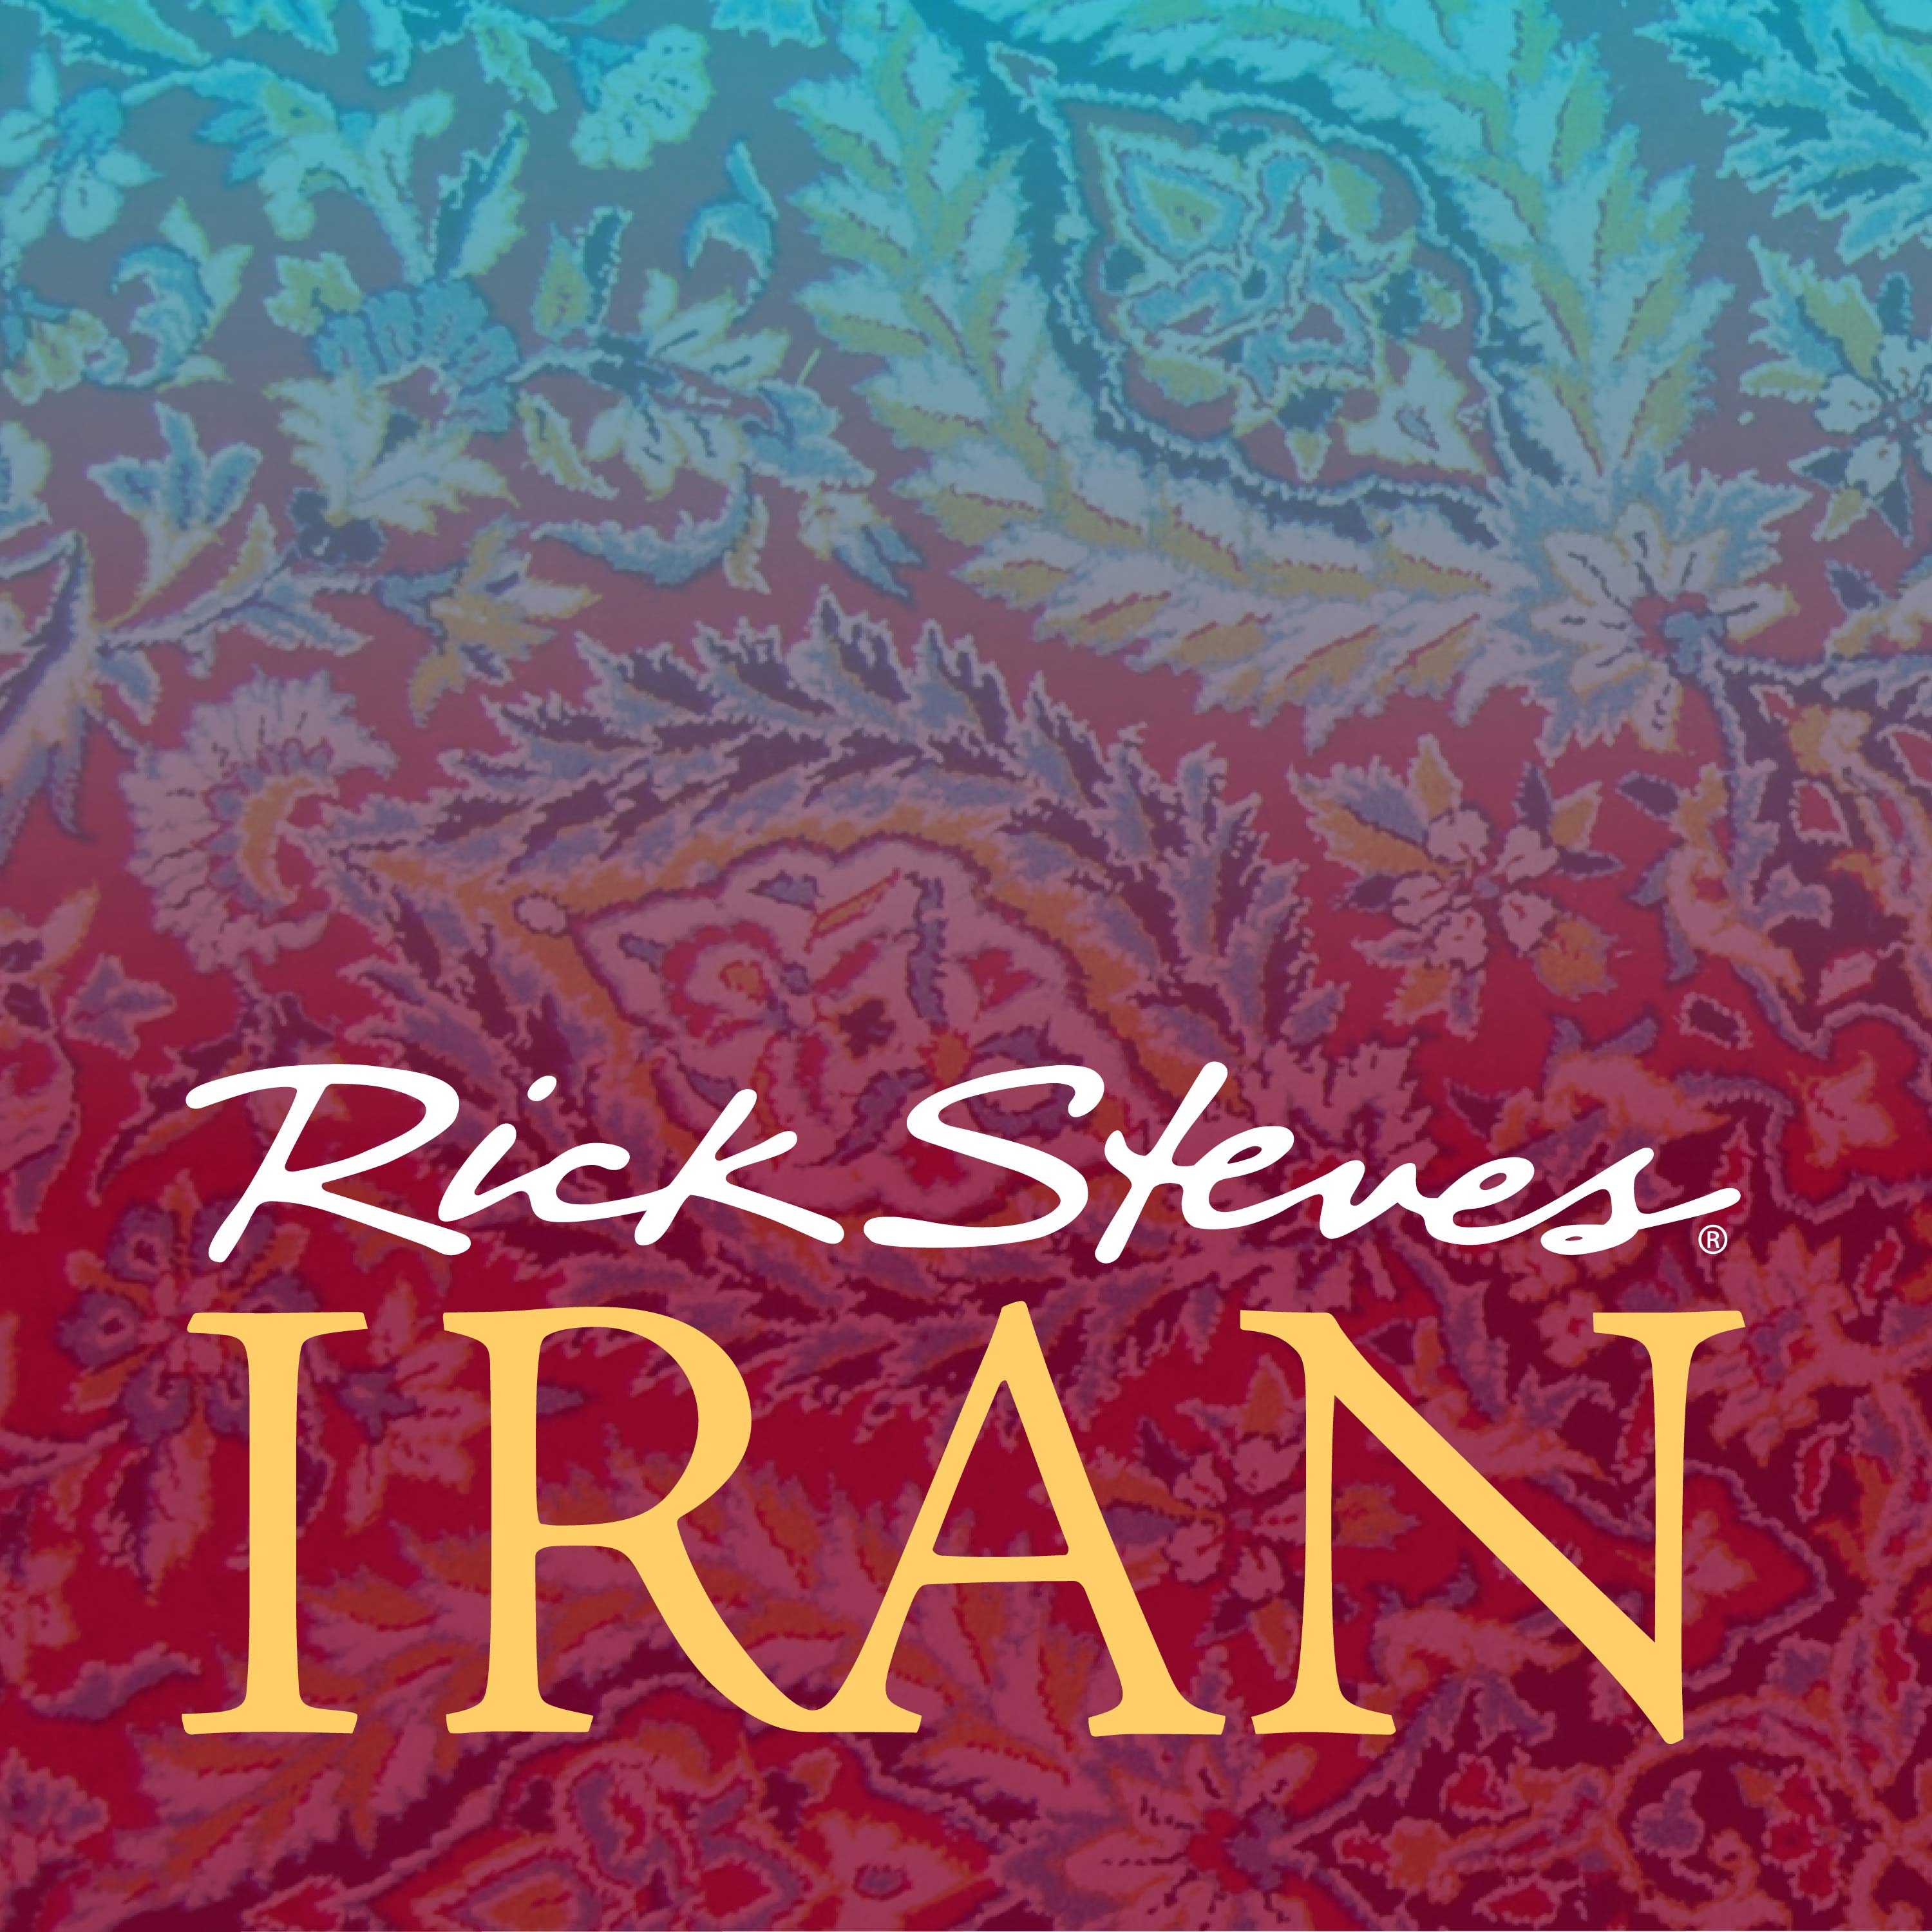 Rick Steves' Iran (Video)